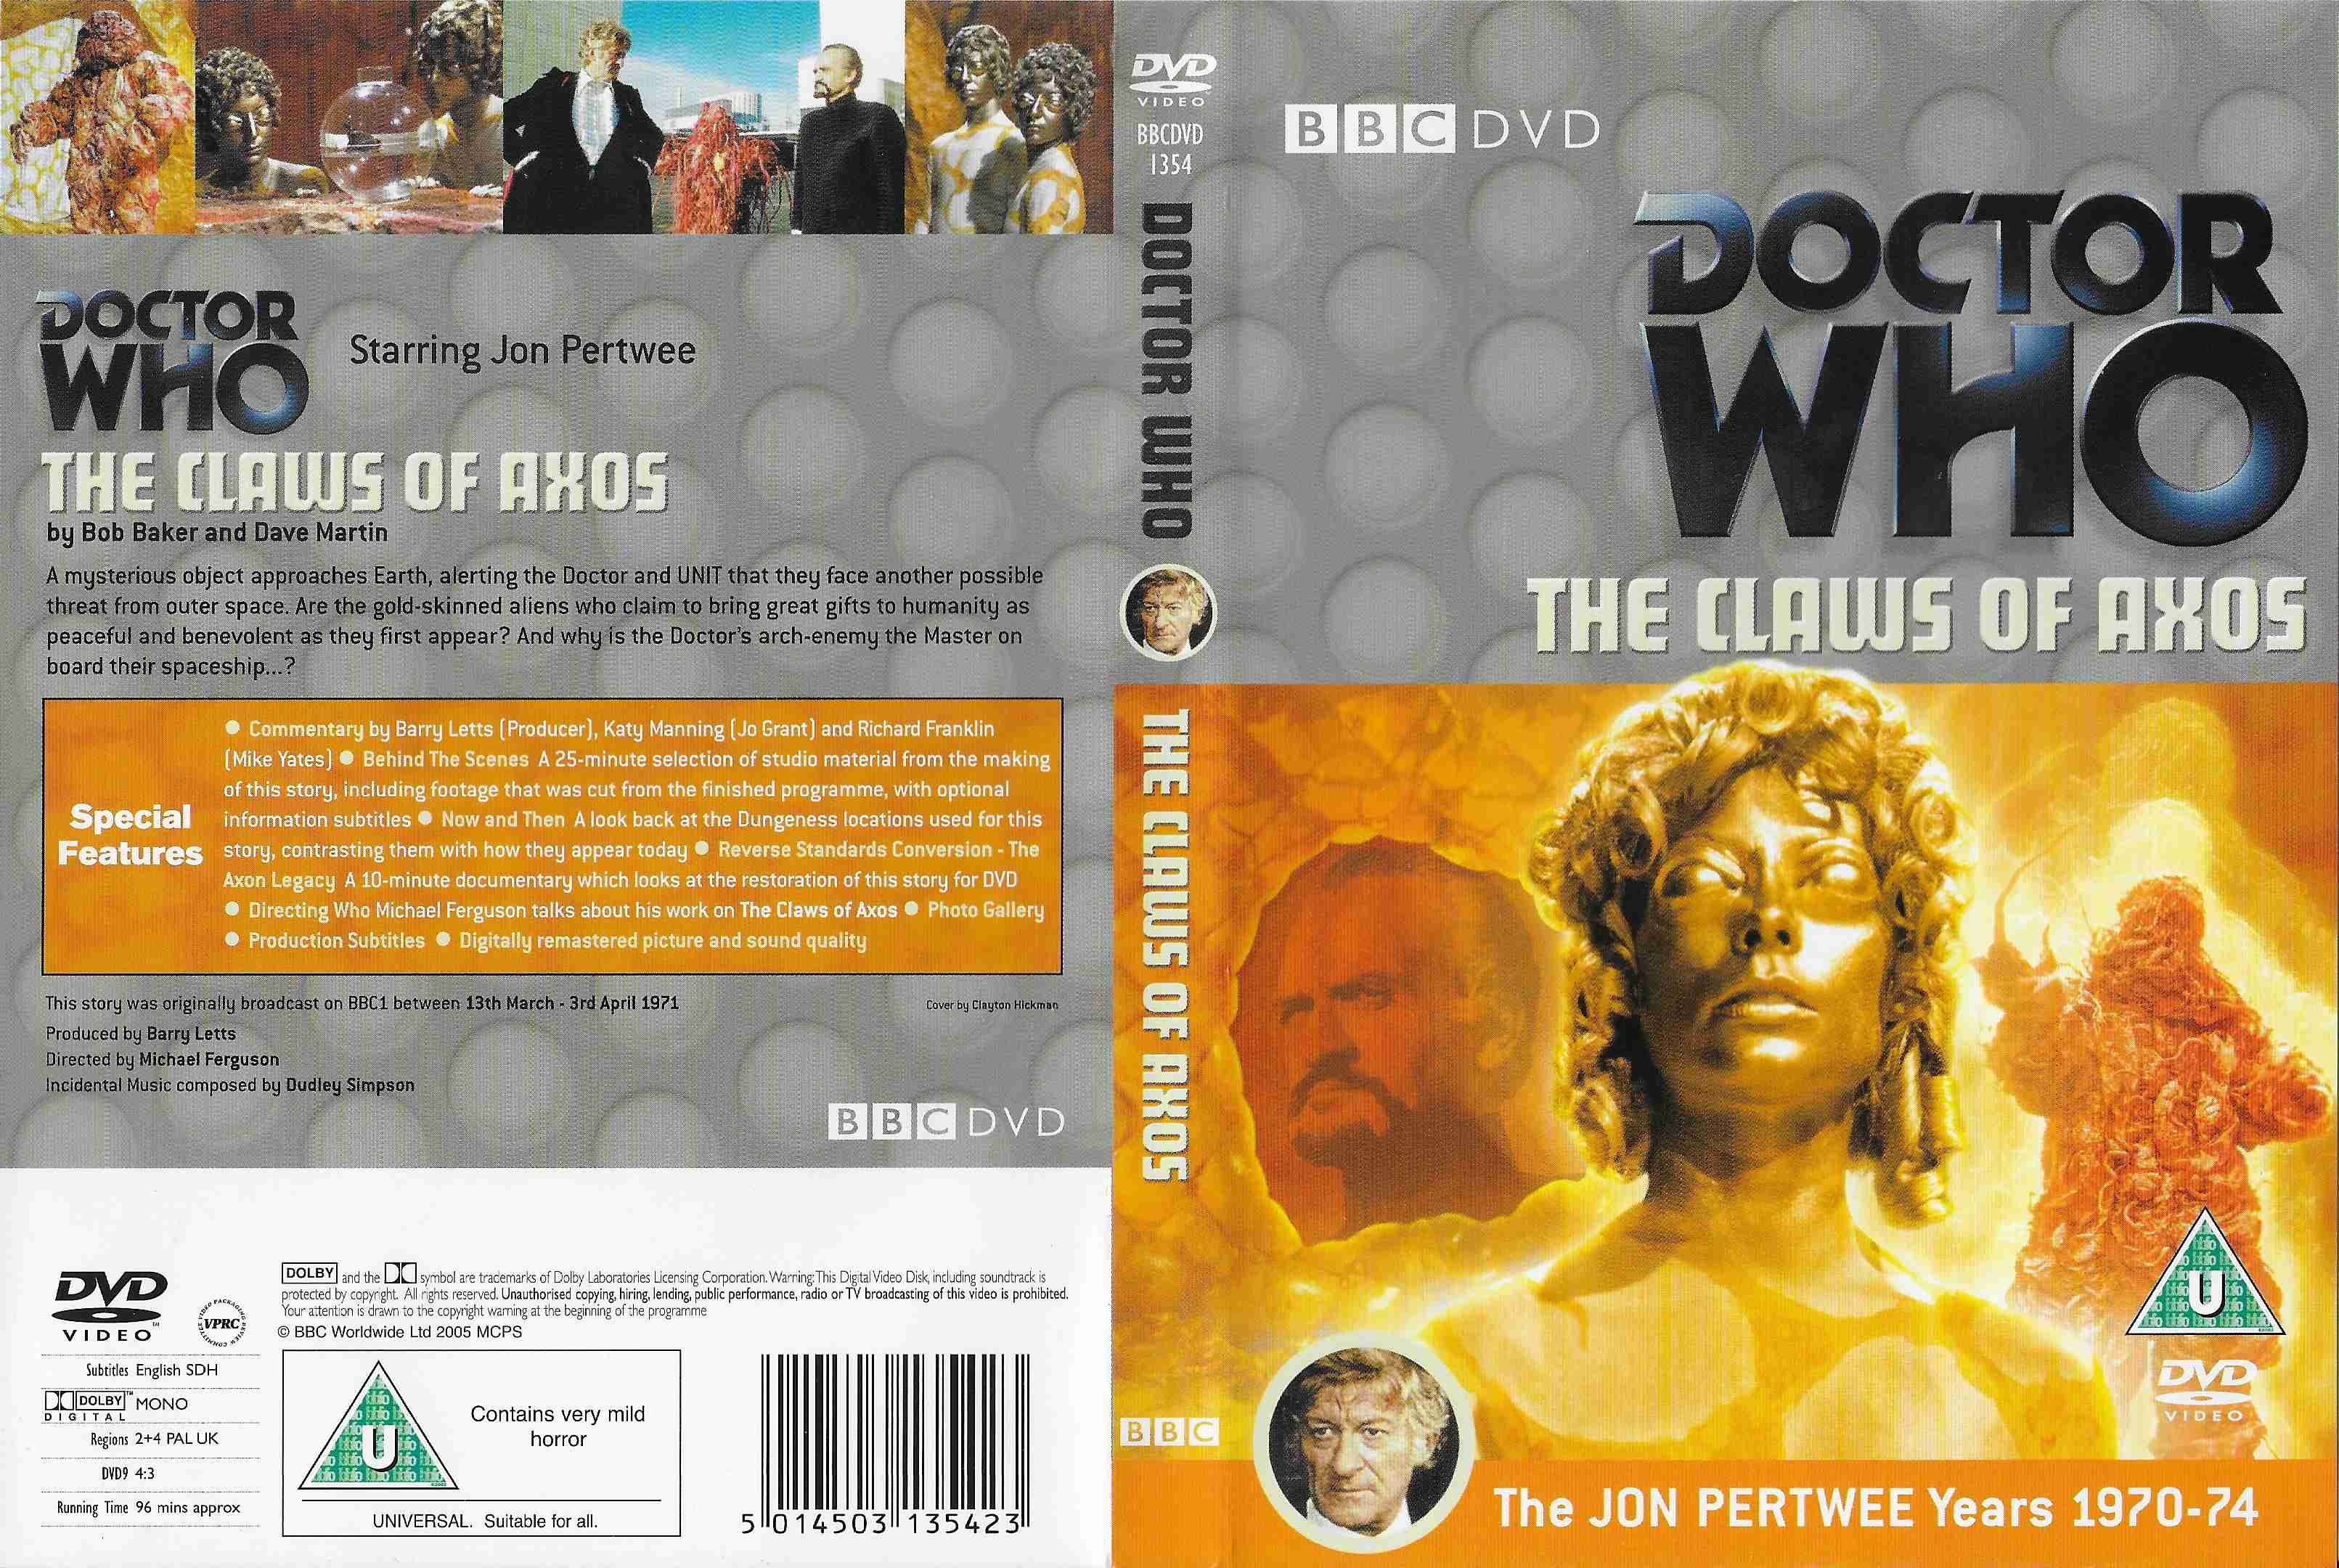 Back cover of BBCDVD 1354